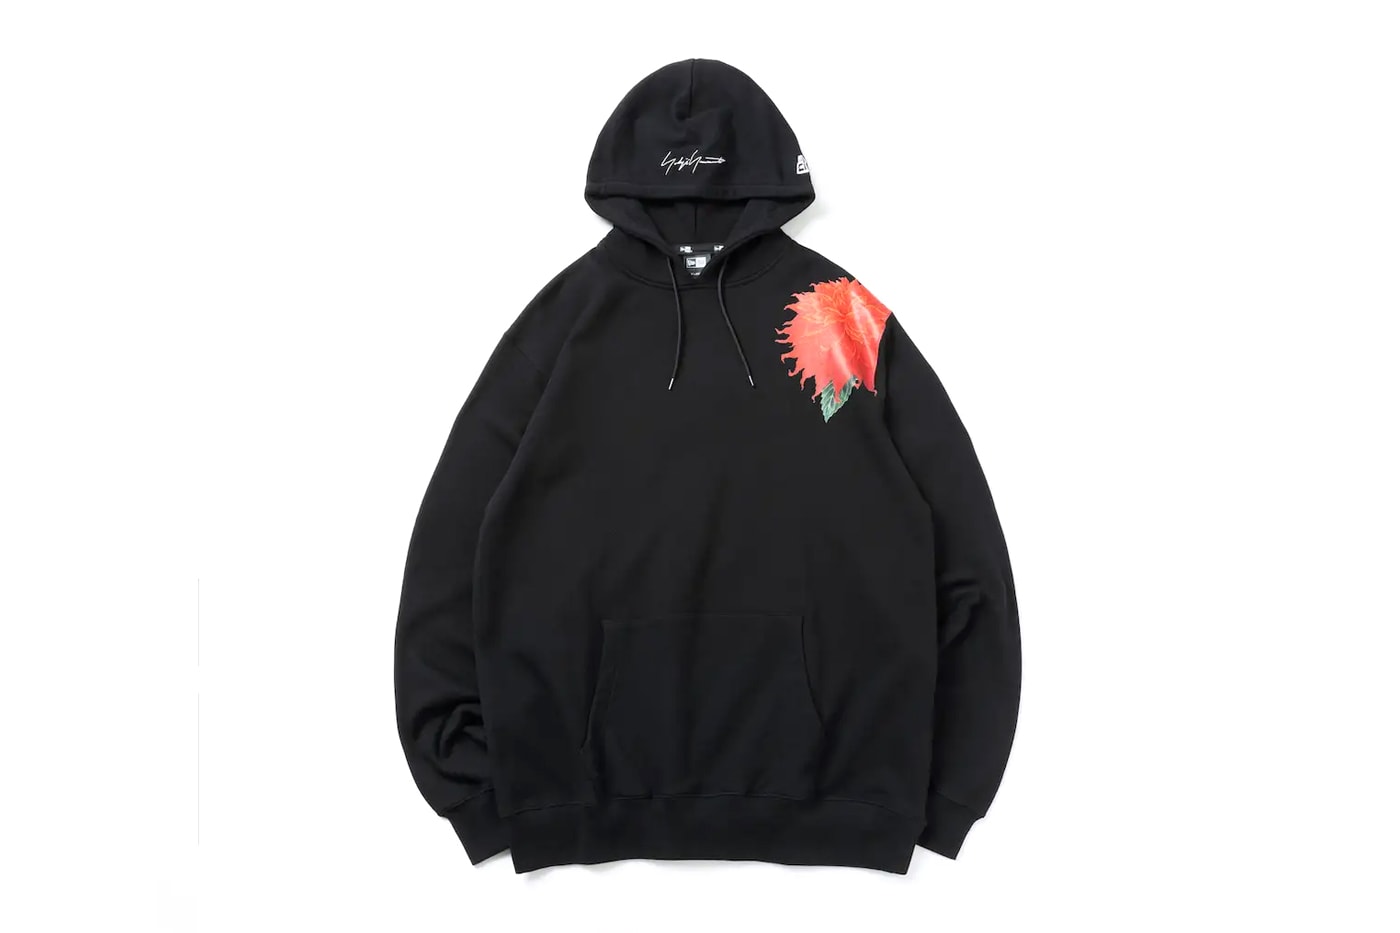 Yohji Yamamoto New Era Spring Summer 2023 ss23 dahlia flower 9thirty bucket 59fifty coach jacket hoodie tee shirt release info date price